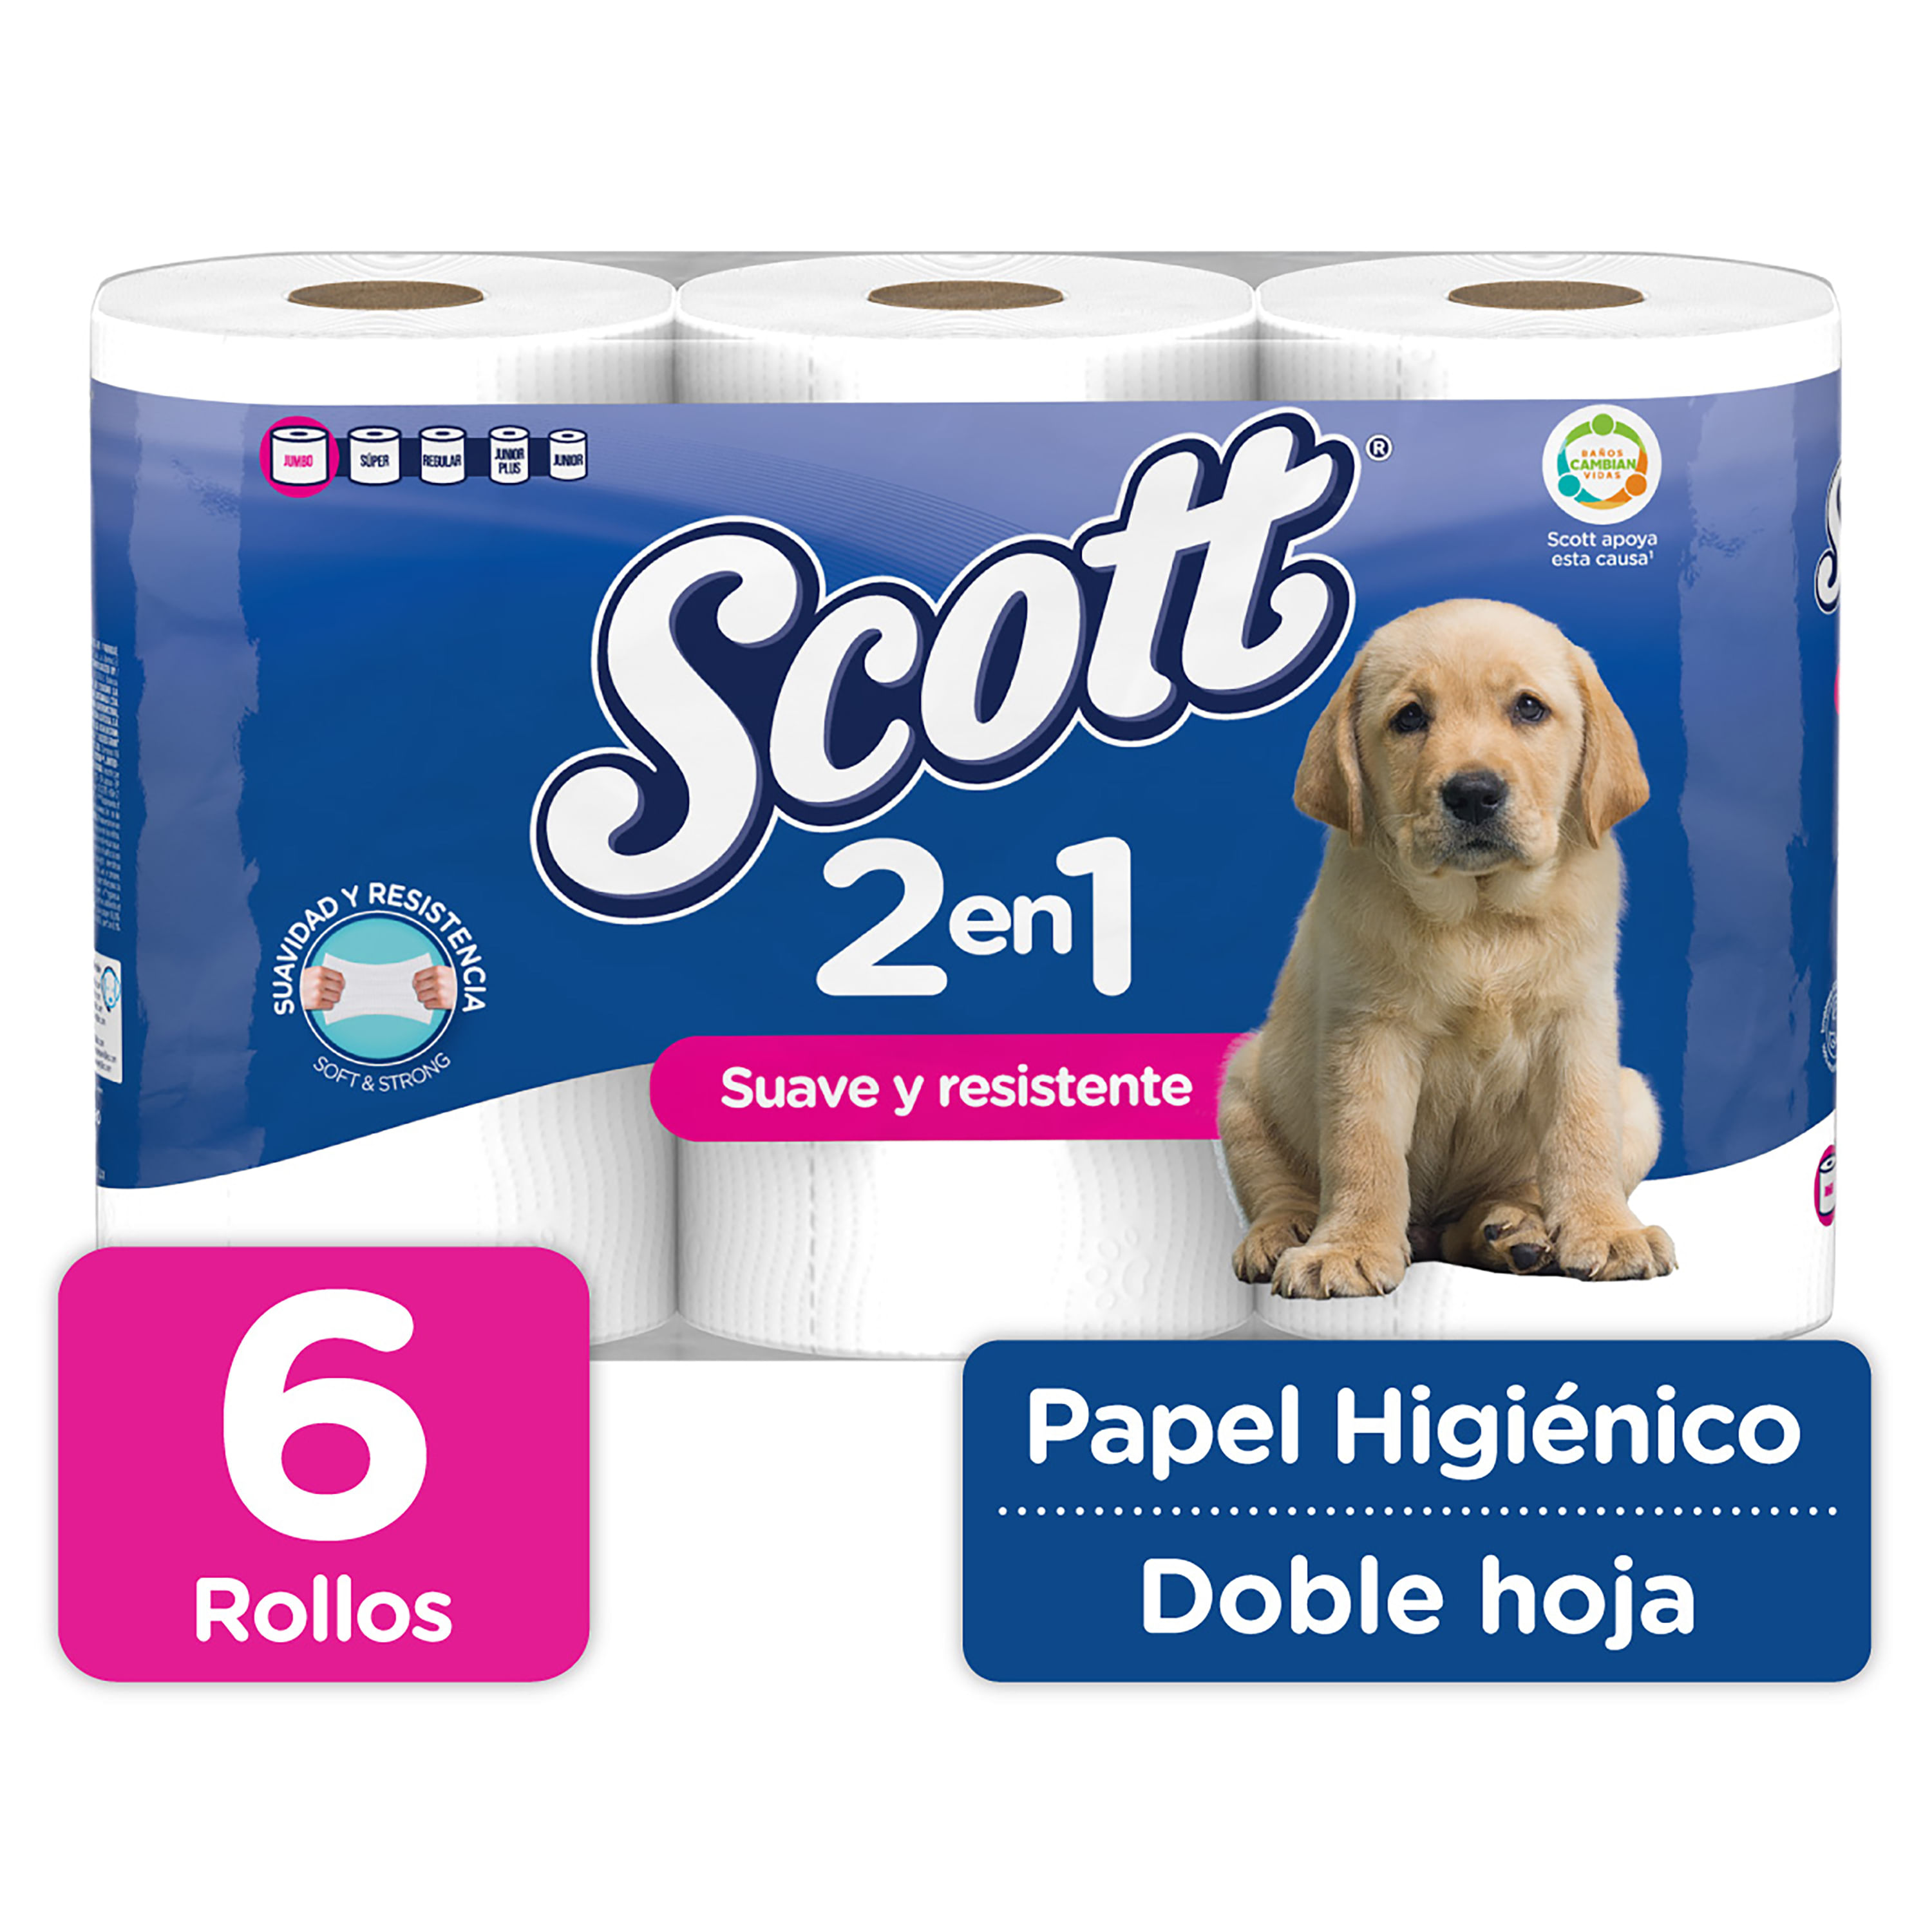 Papel Higienico Scottex Megarrollo Doble Largo Paquetede 9 Rollos — Firpack